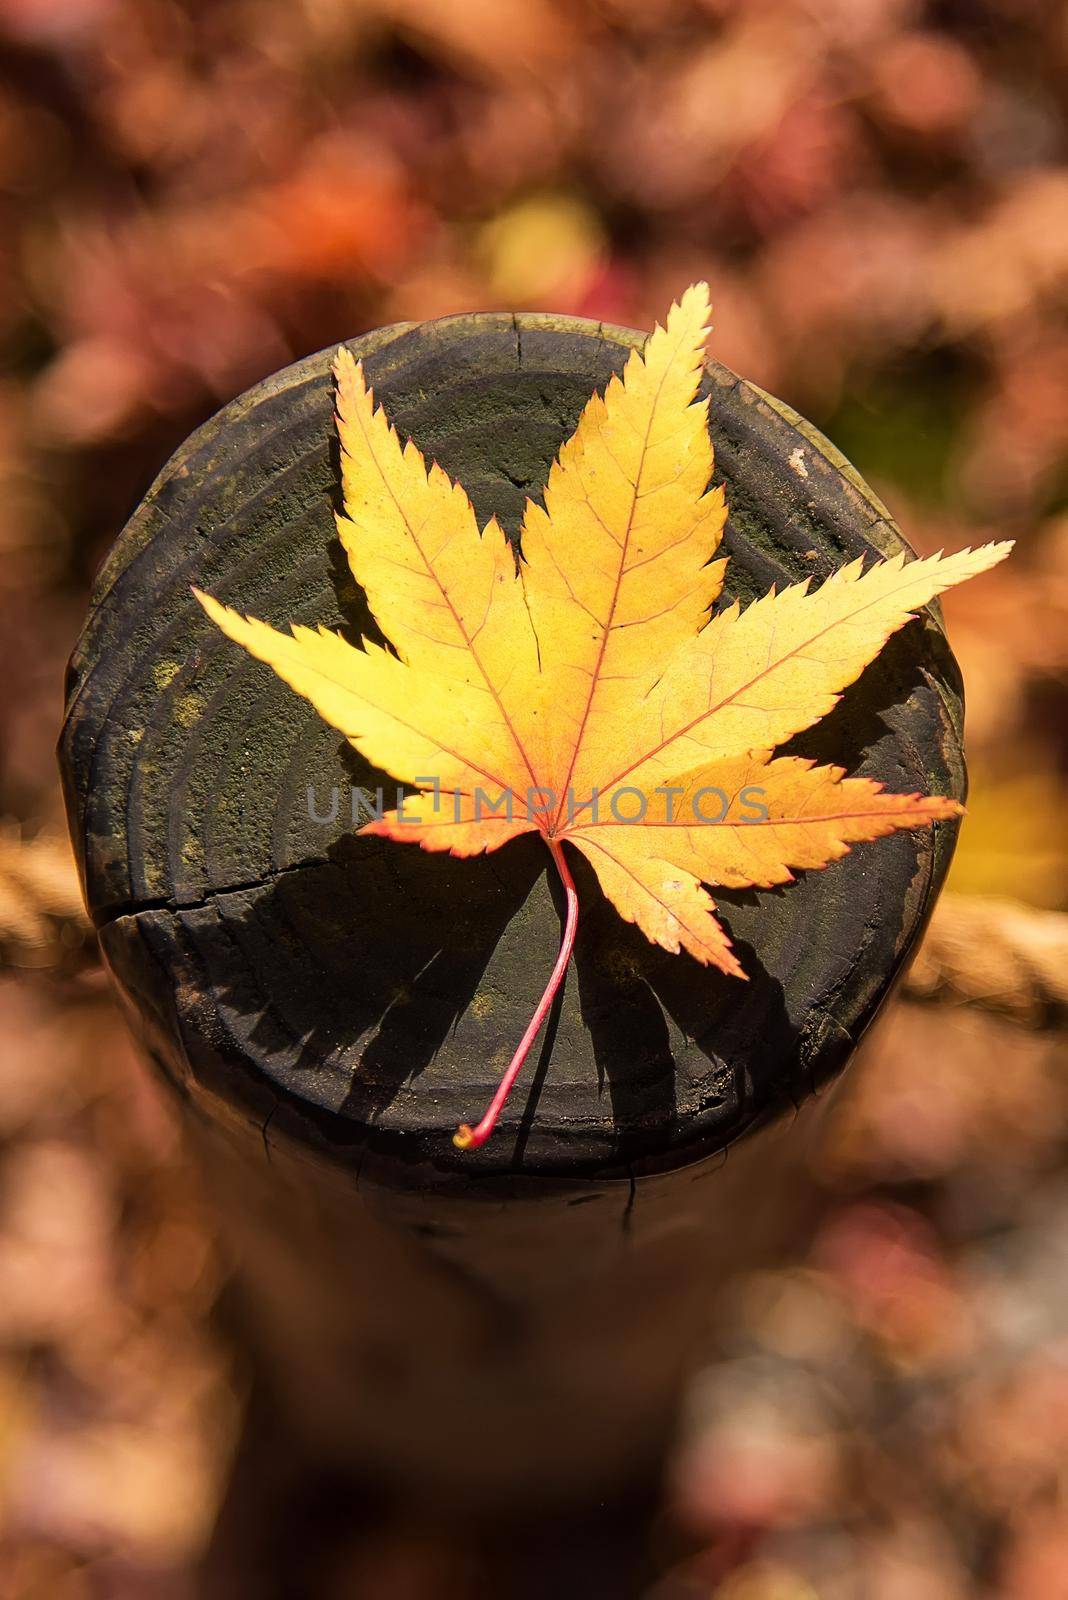 Japanese maple leaf on wood pattern backgroud in autumn season at Kyoto,Japan. by Nuamfolio